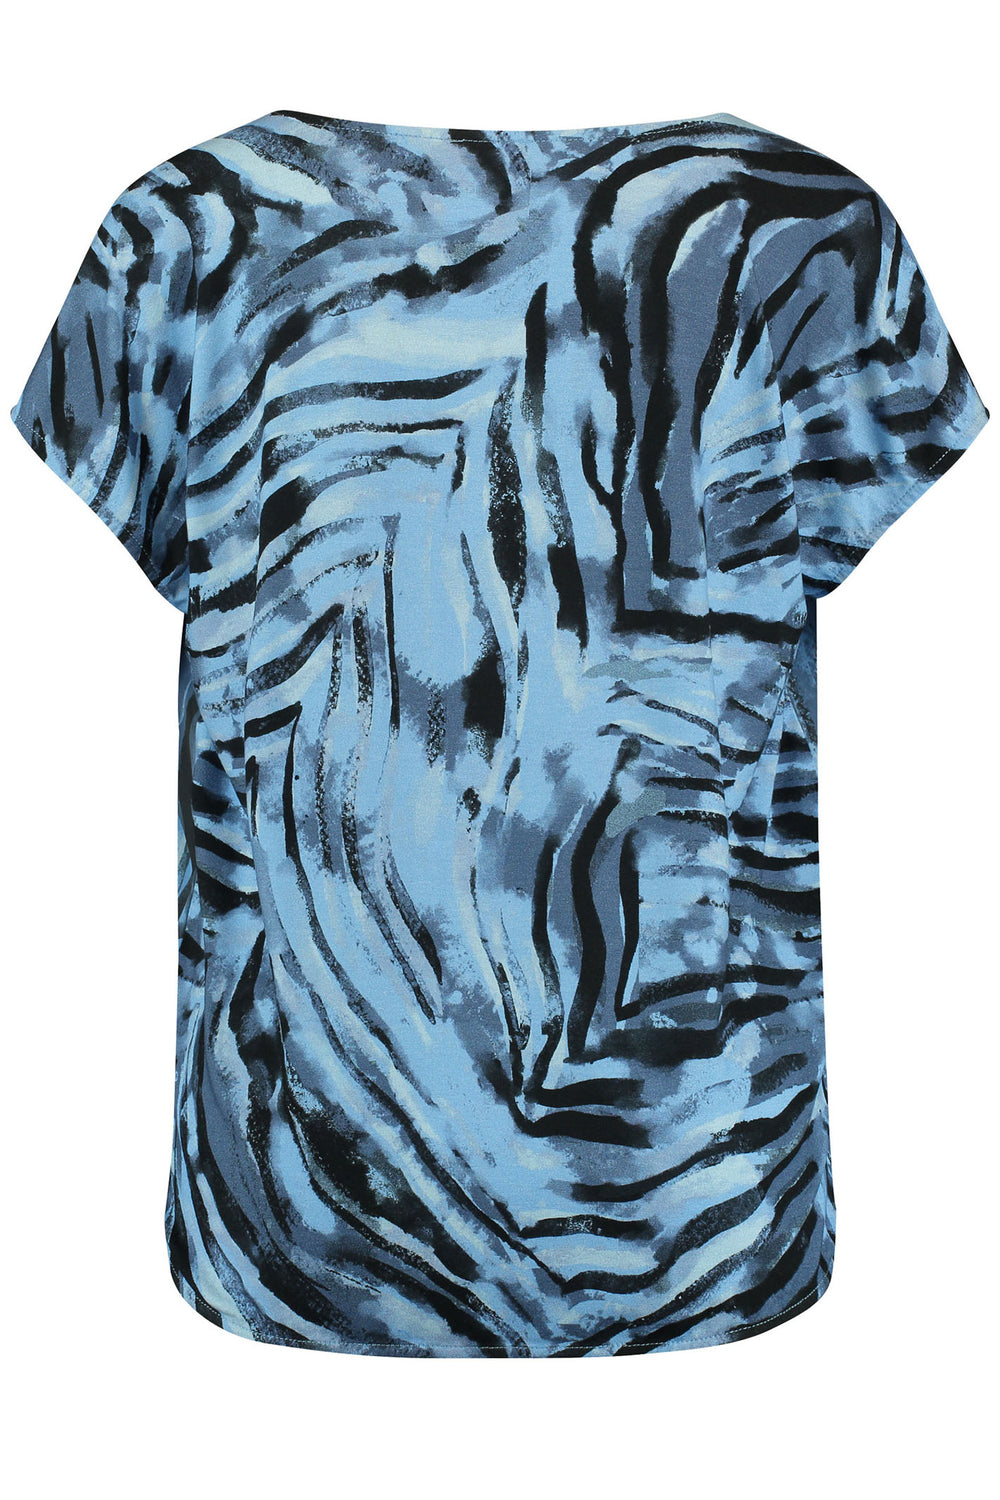 Gerry Weber 270032-44002 Blue Print V-Neck T-Shirt - Dotique Chesterfield